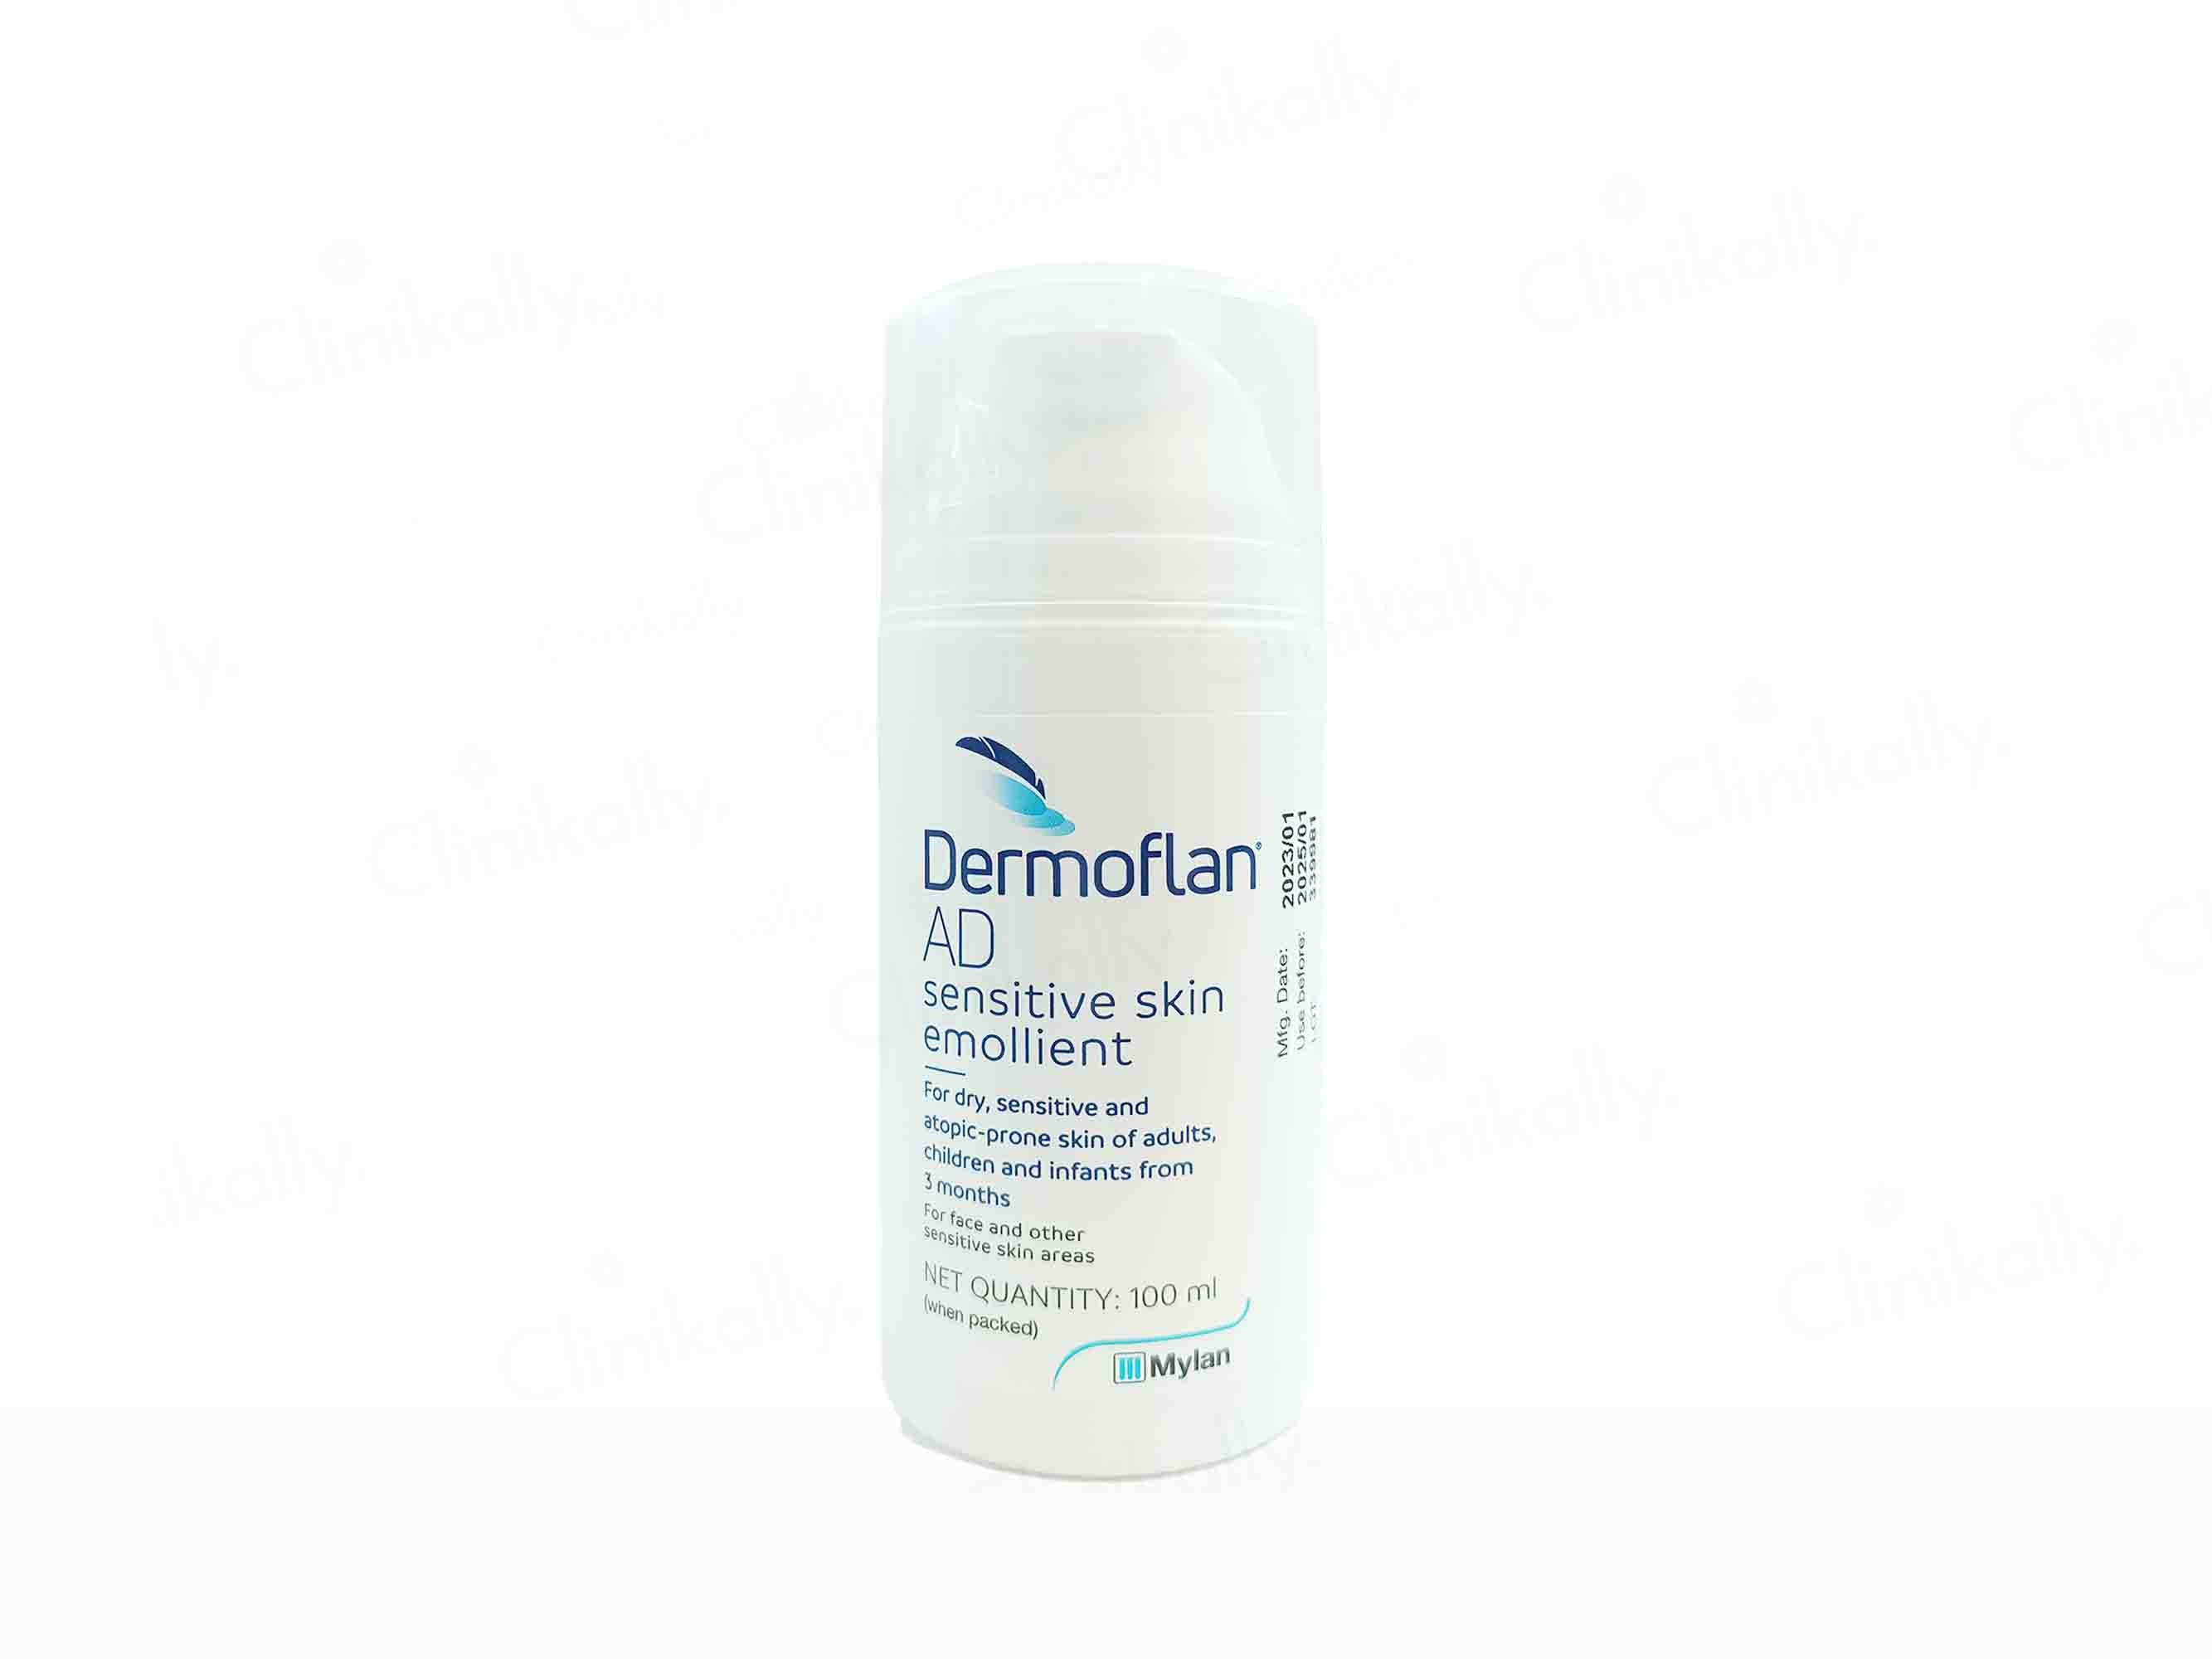 Dermoflan AD Sensitive Skin Emollient - Clinikaly